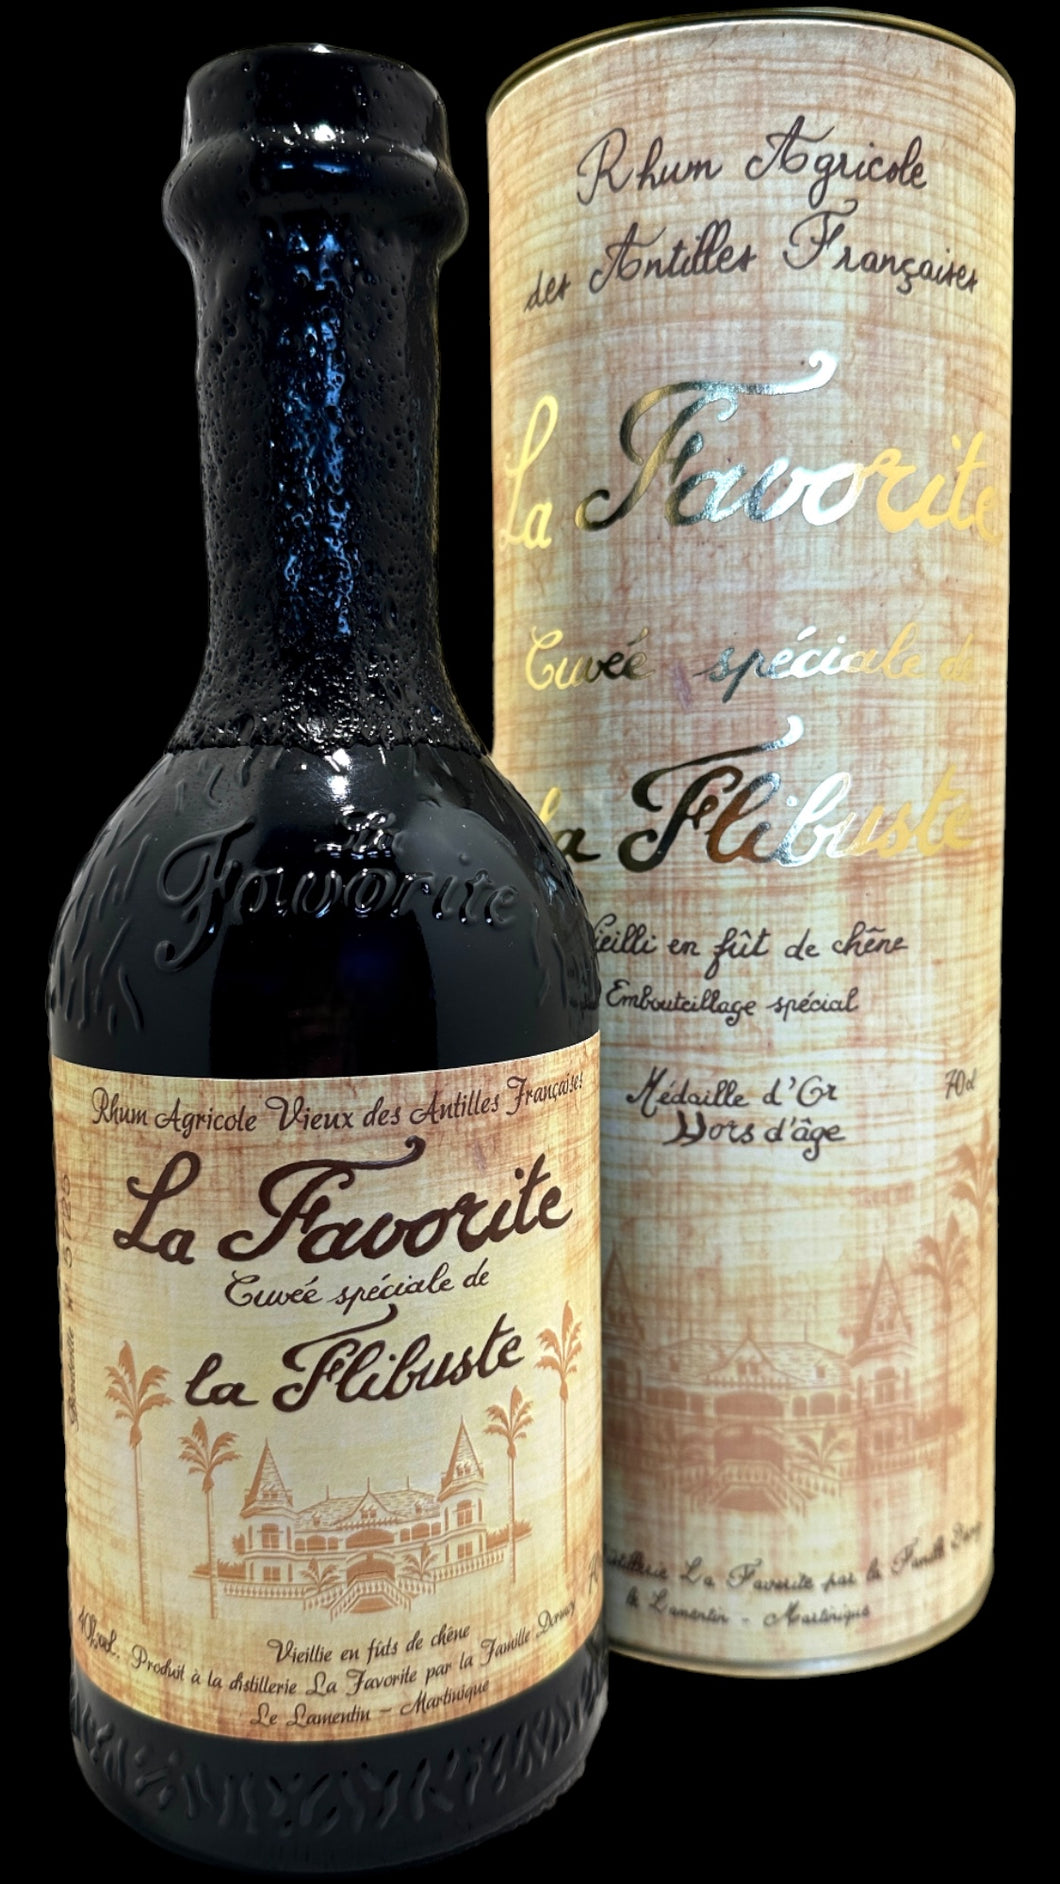 La Flibuste Distillerie La Favorite 1999